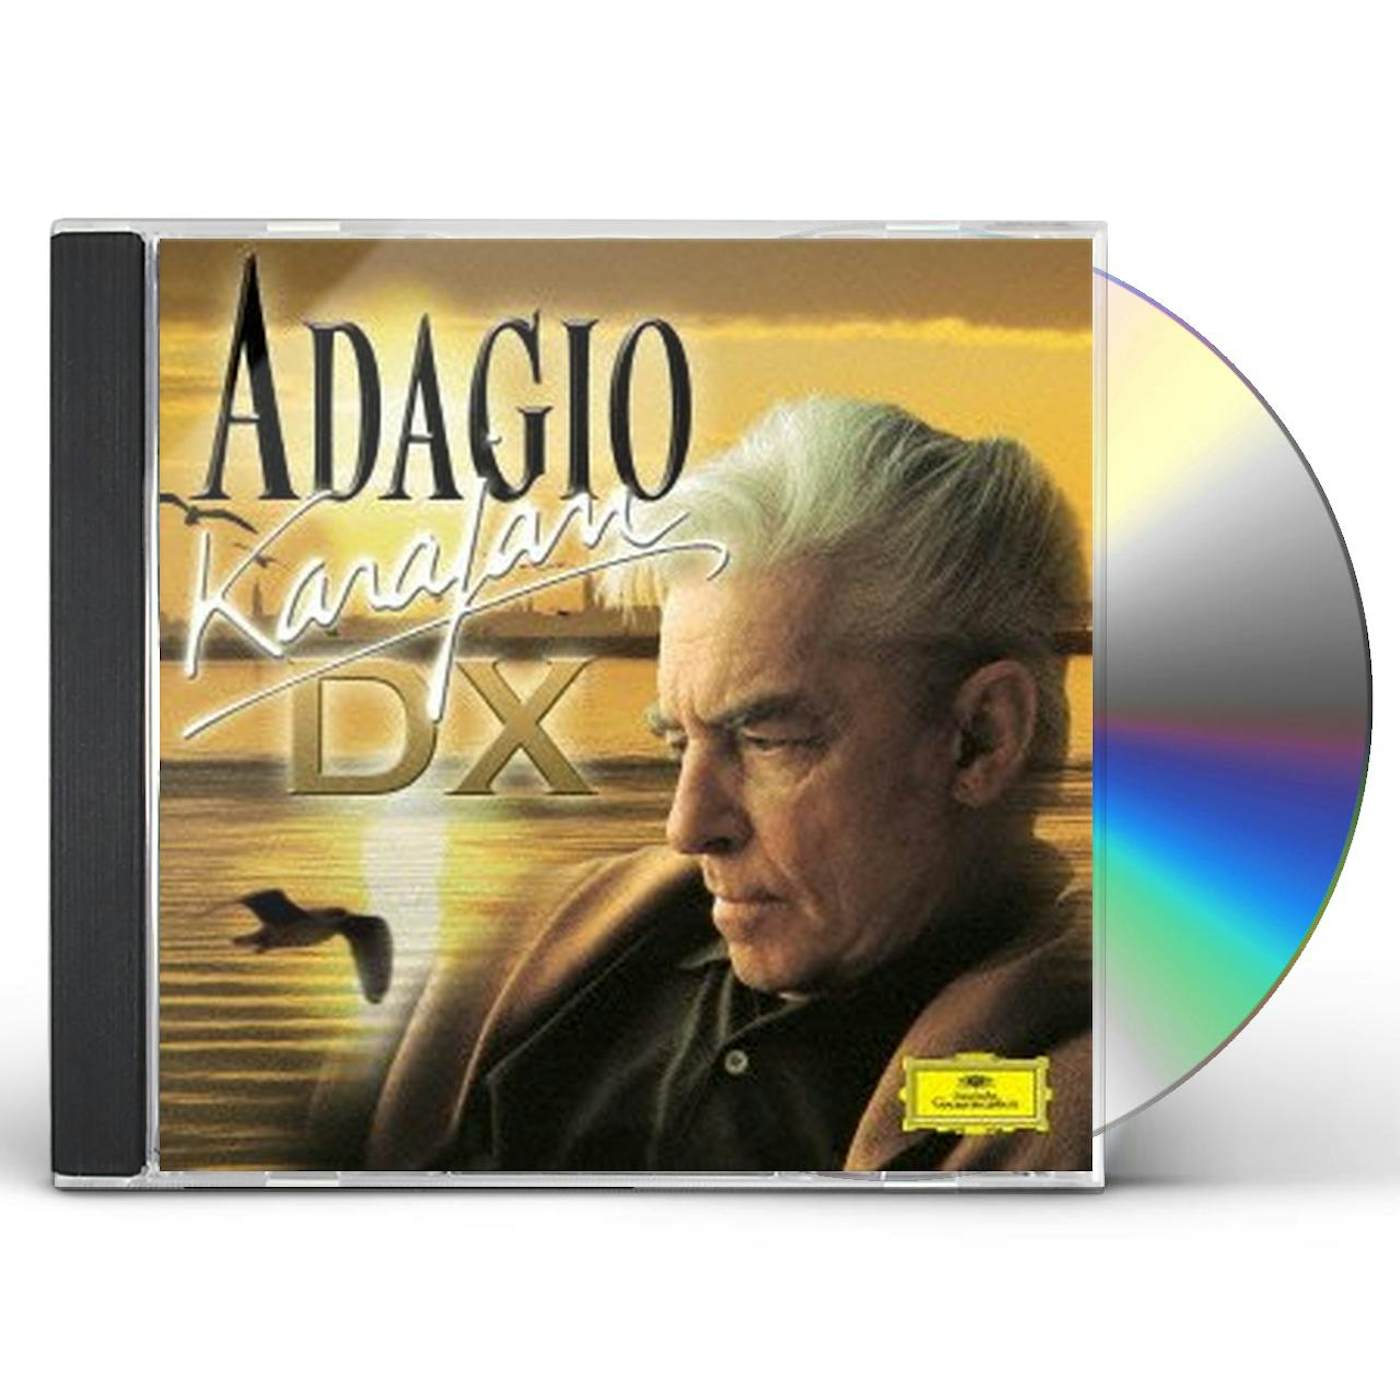 ADAGIO Herbert von Karajan DX CD